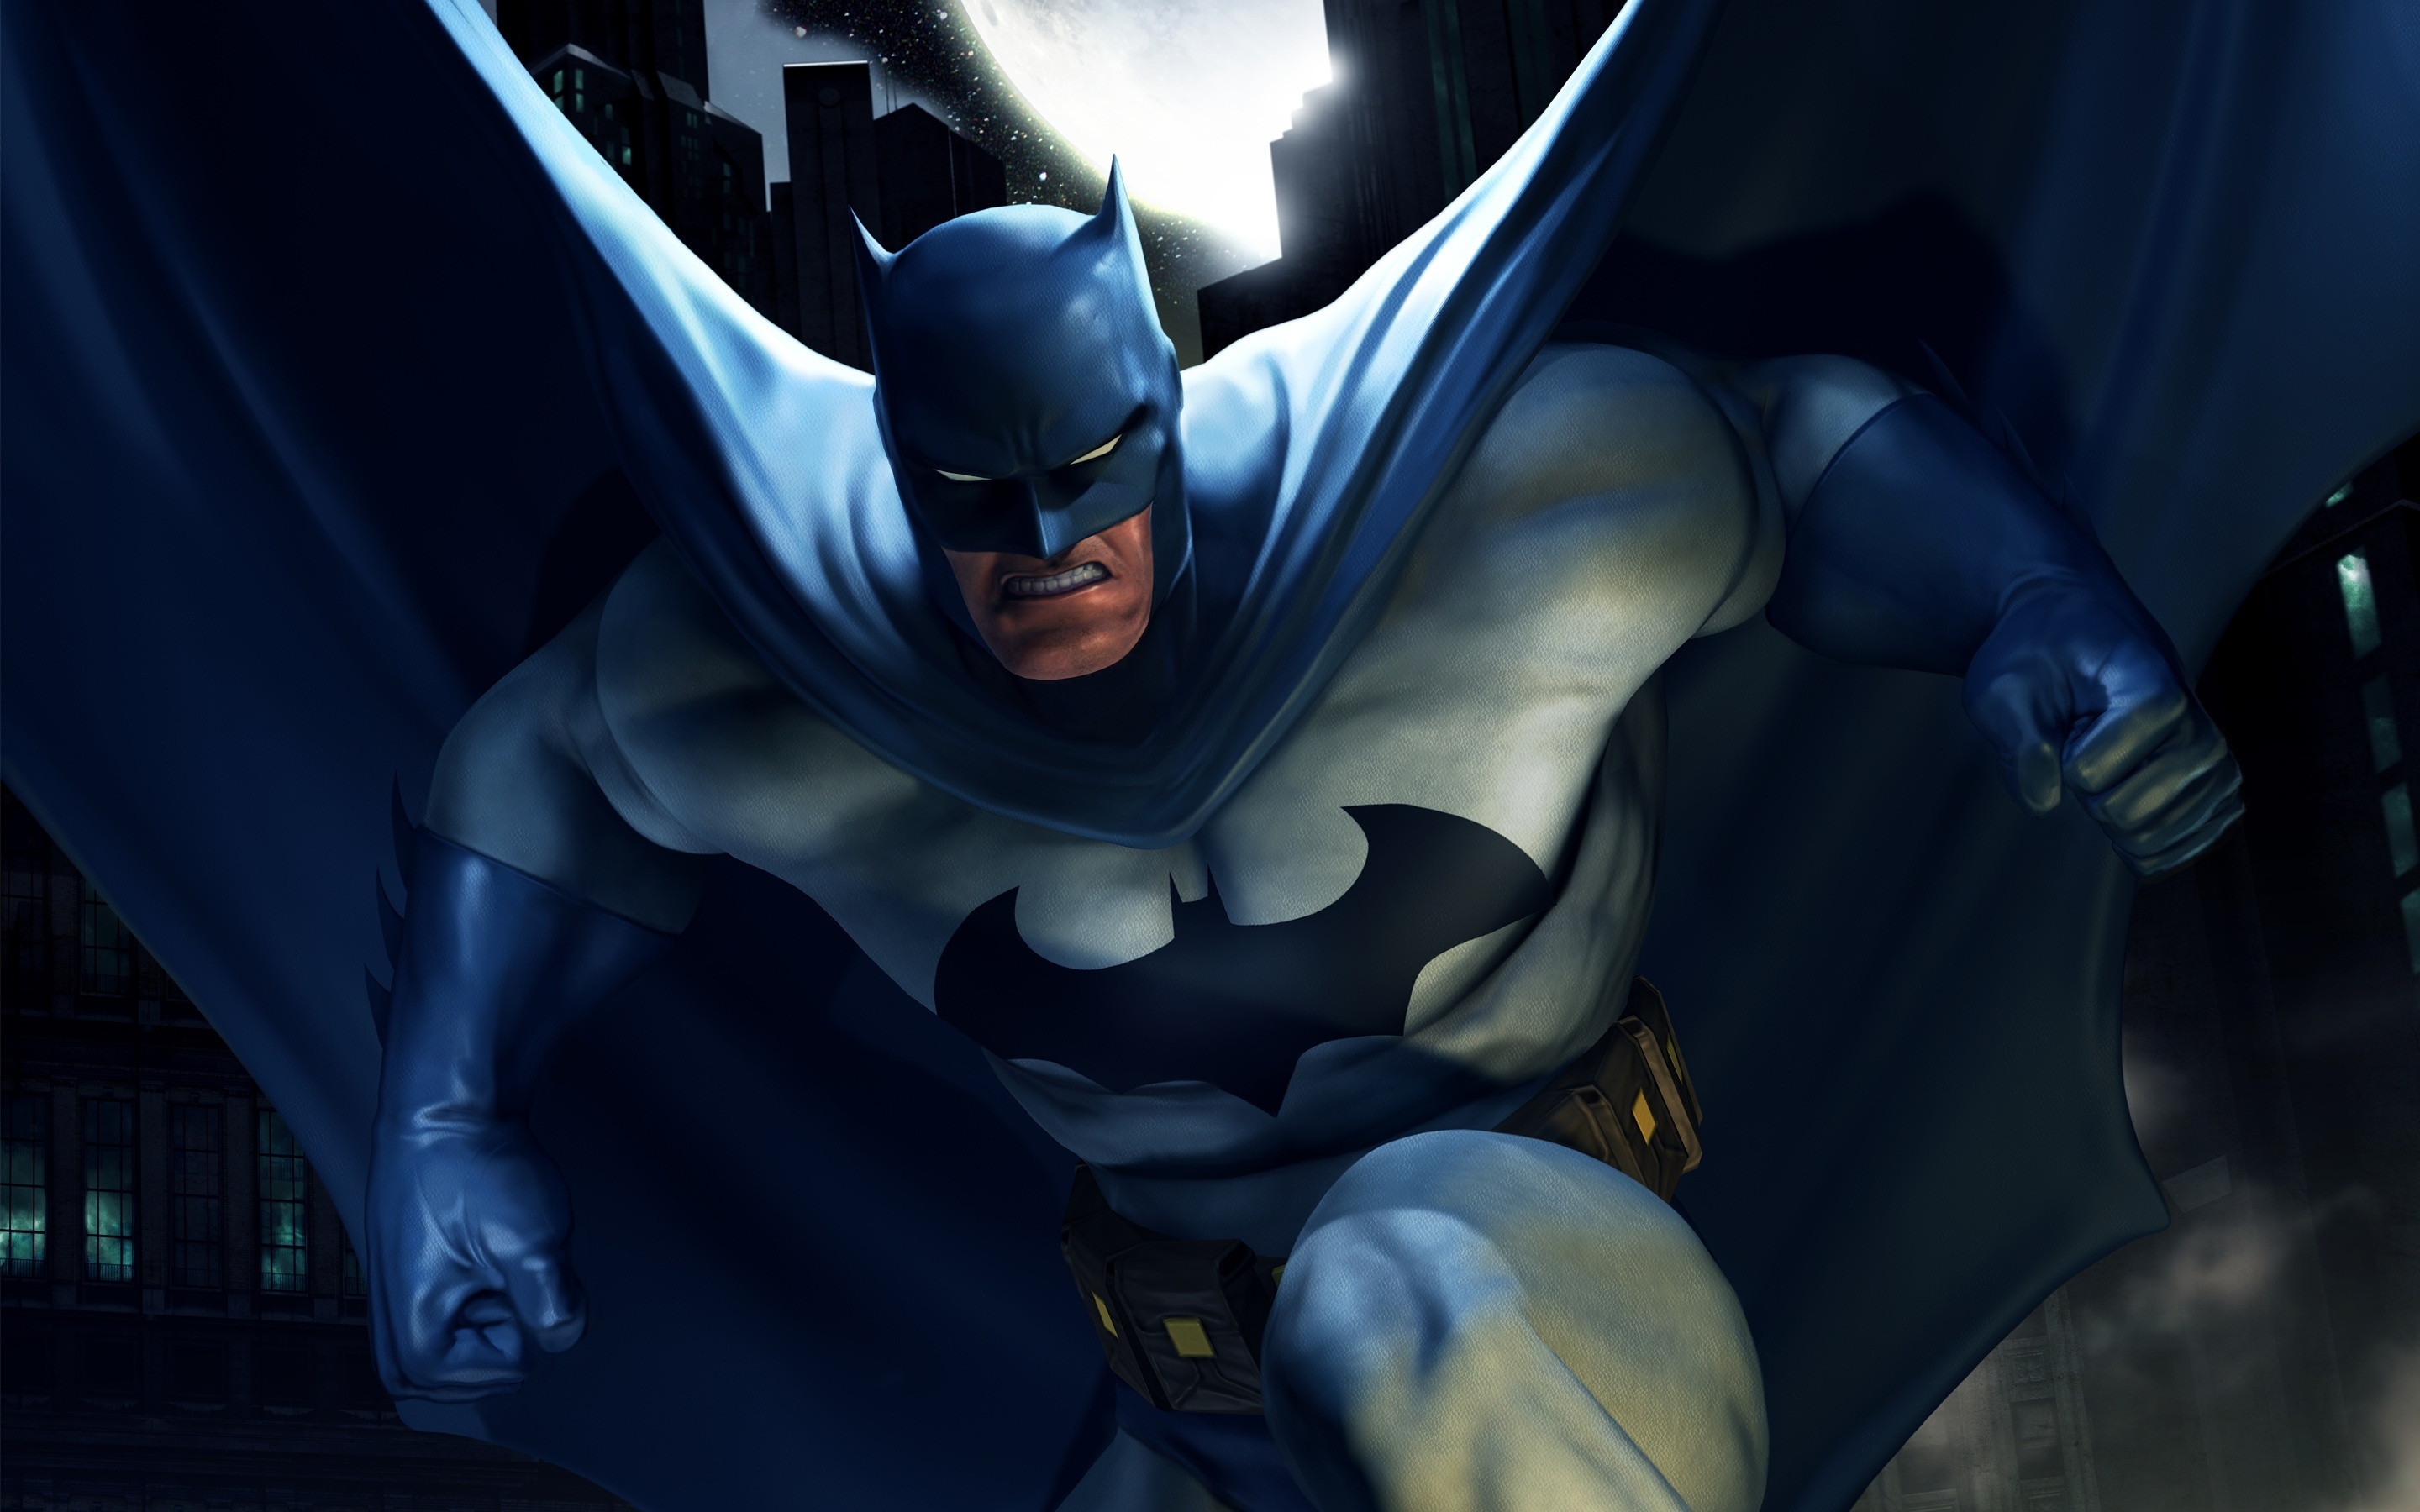 Batman DC Universe for 2880 x 1800 Retina Display resolution